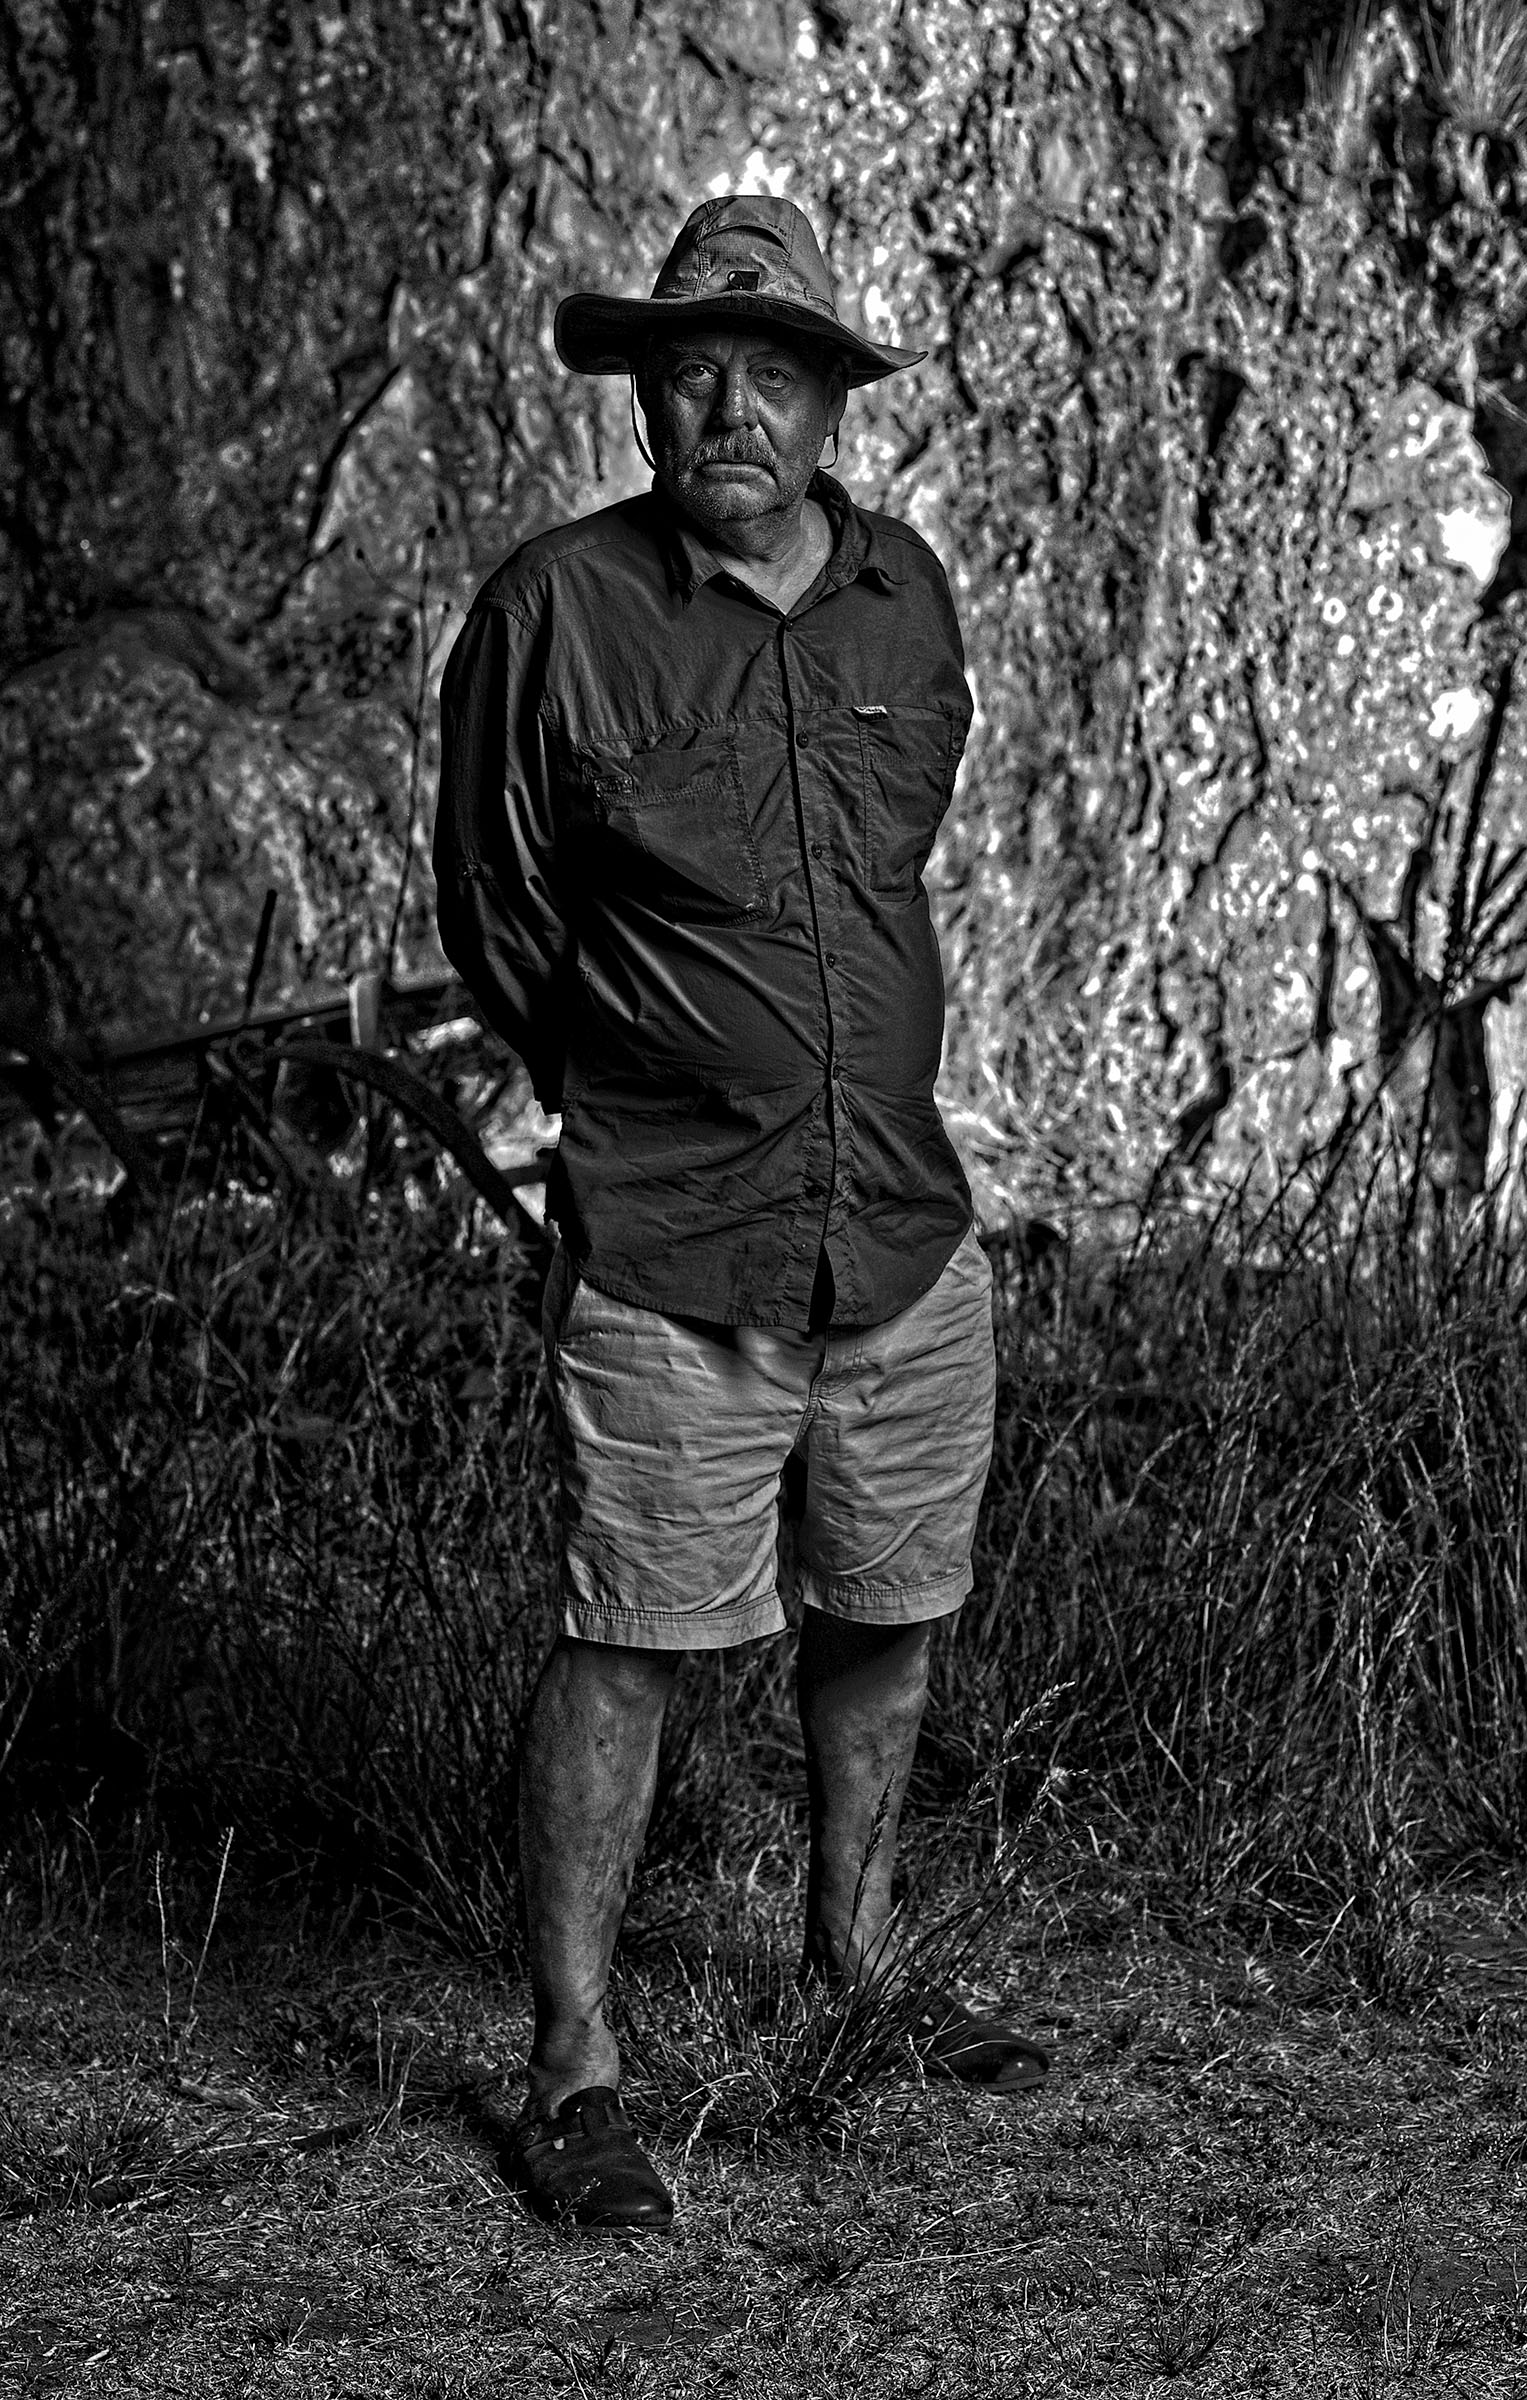 Hans Portrait, East Fork, Gila Wilderness